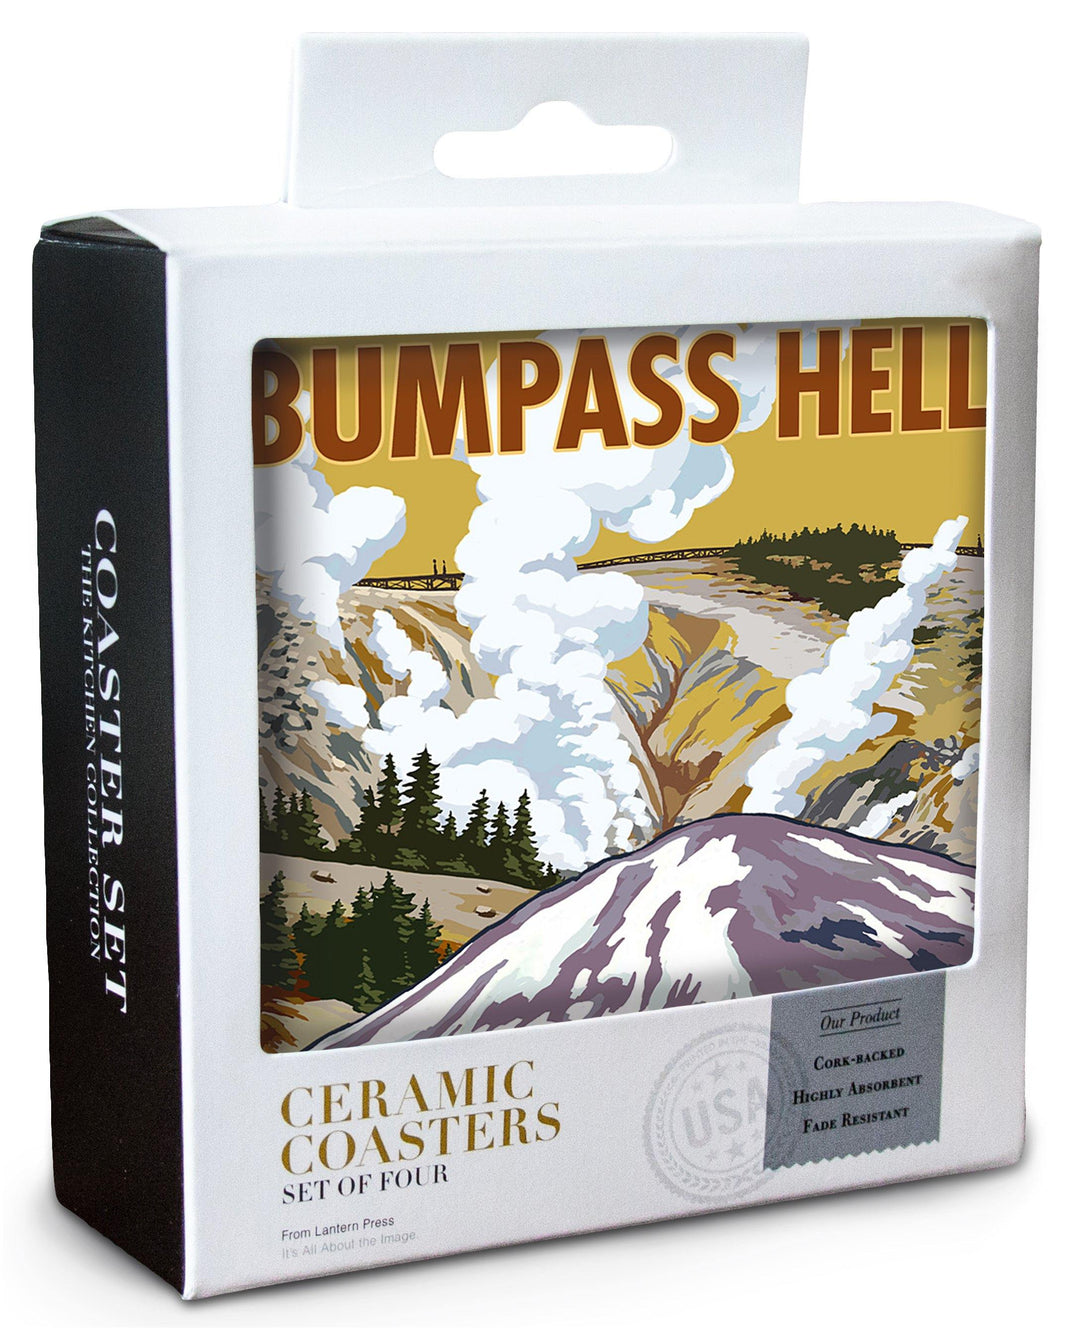 Lassen Volcanic National Park, California, Bumpass Hell, Lantern Press Artwork, Coaster Set Coasters Lantern Press 